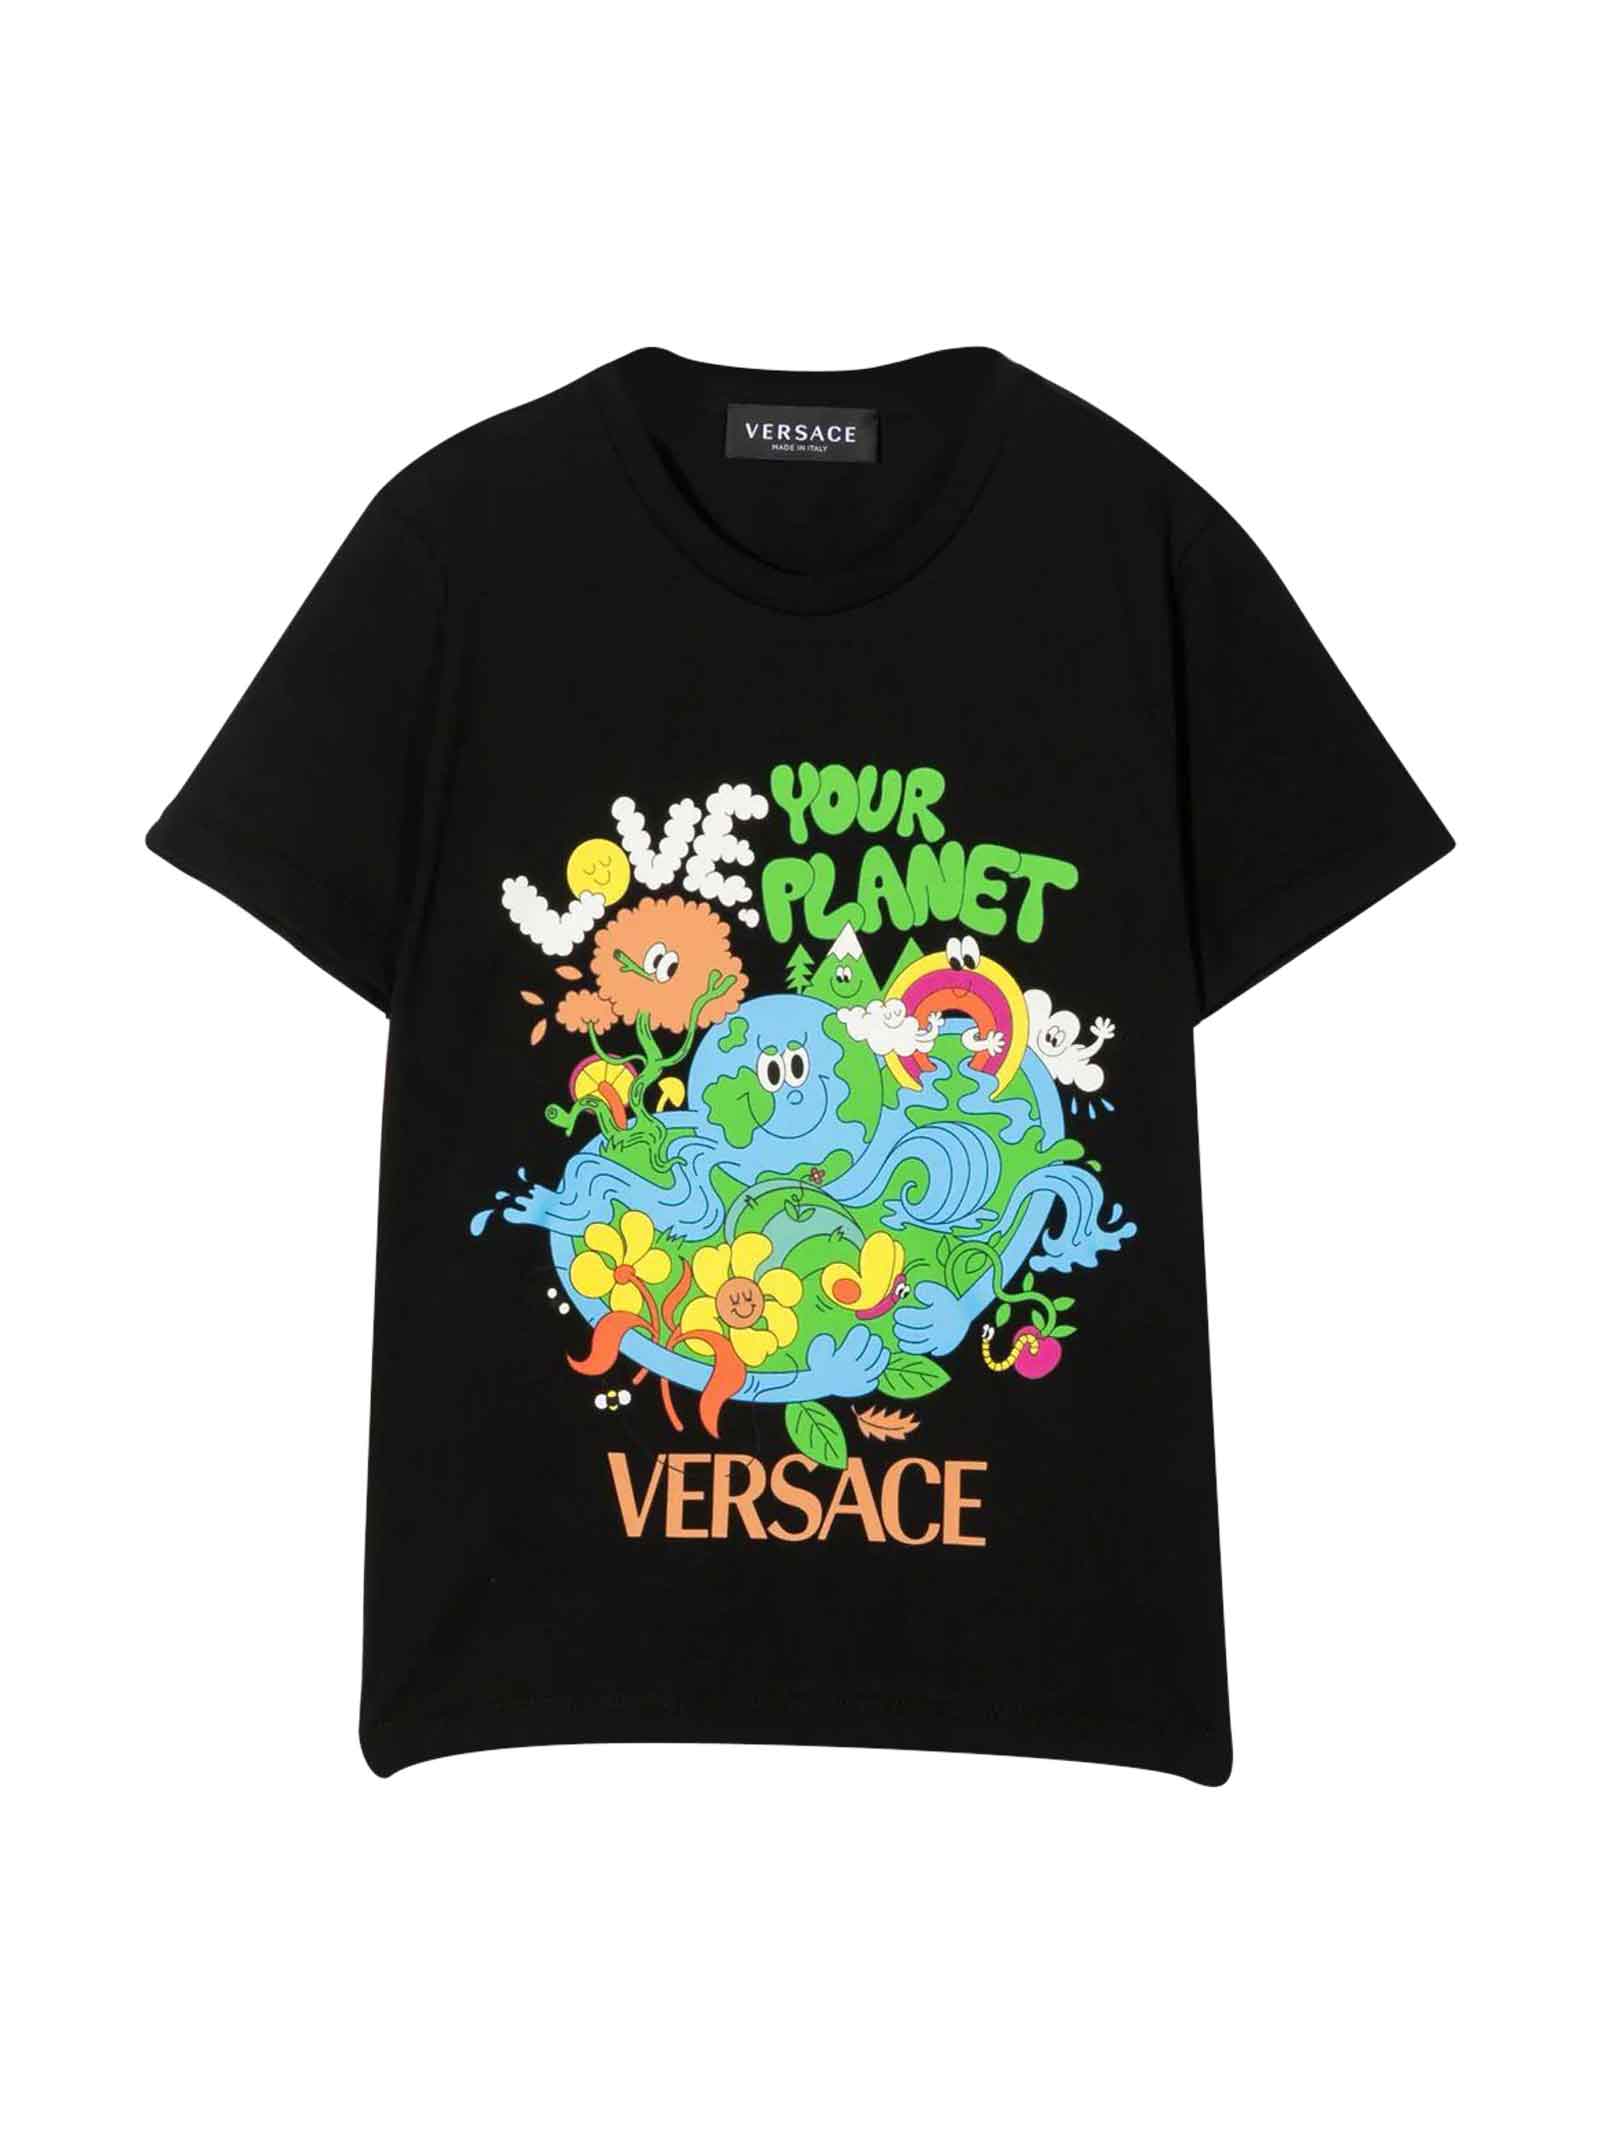 Versace Black T-shirt Boy Kids